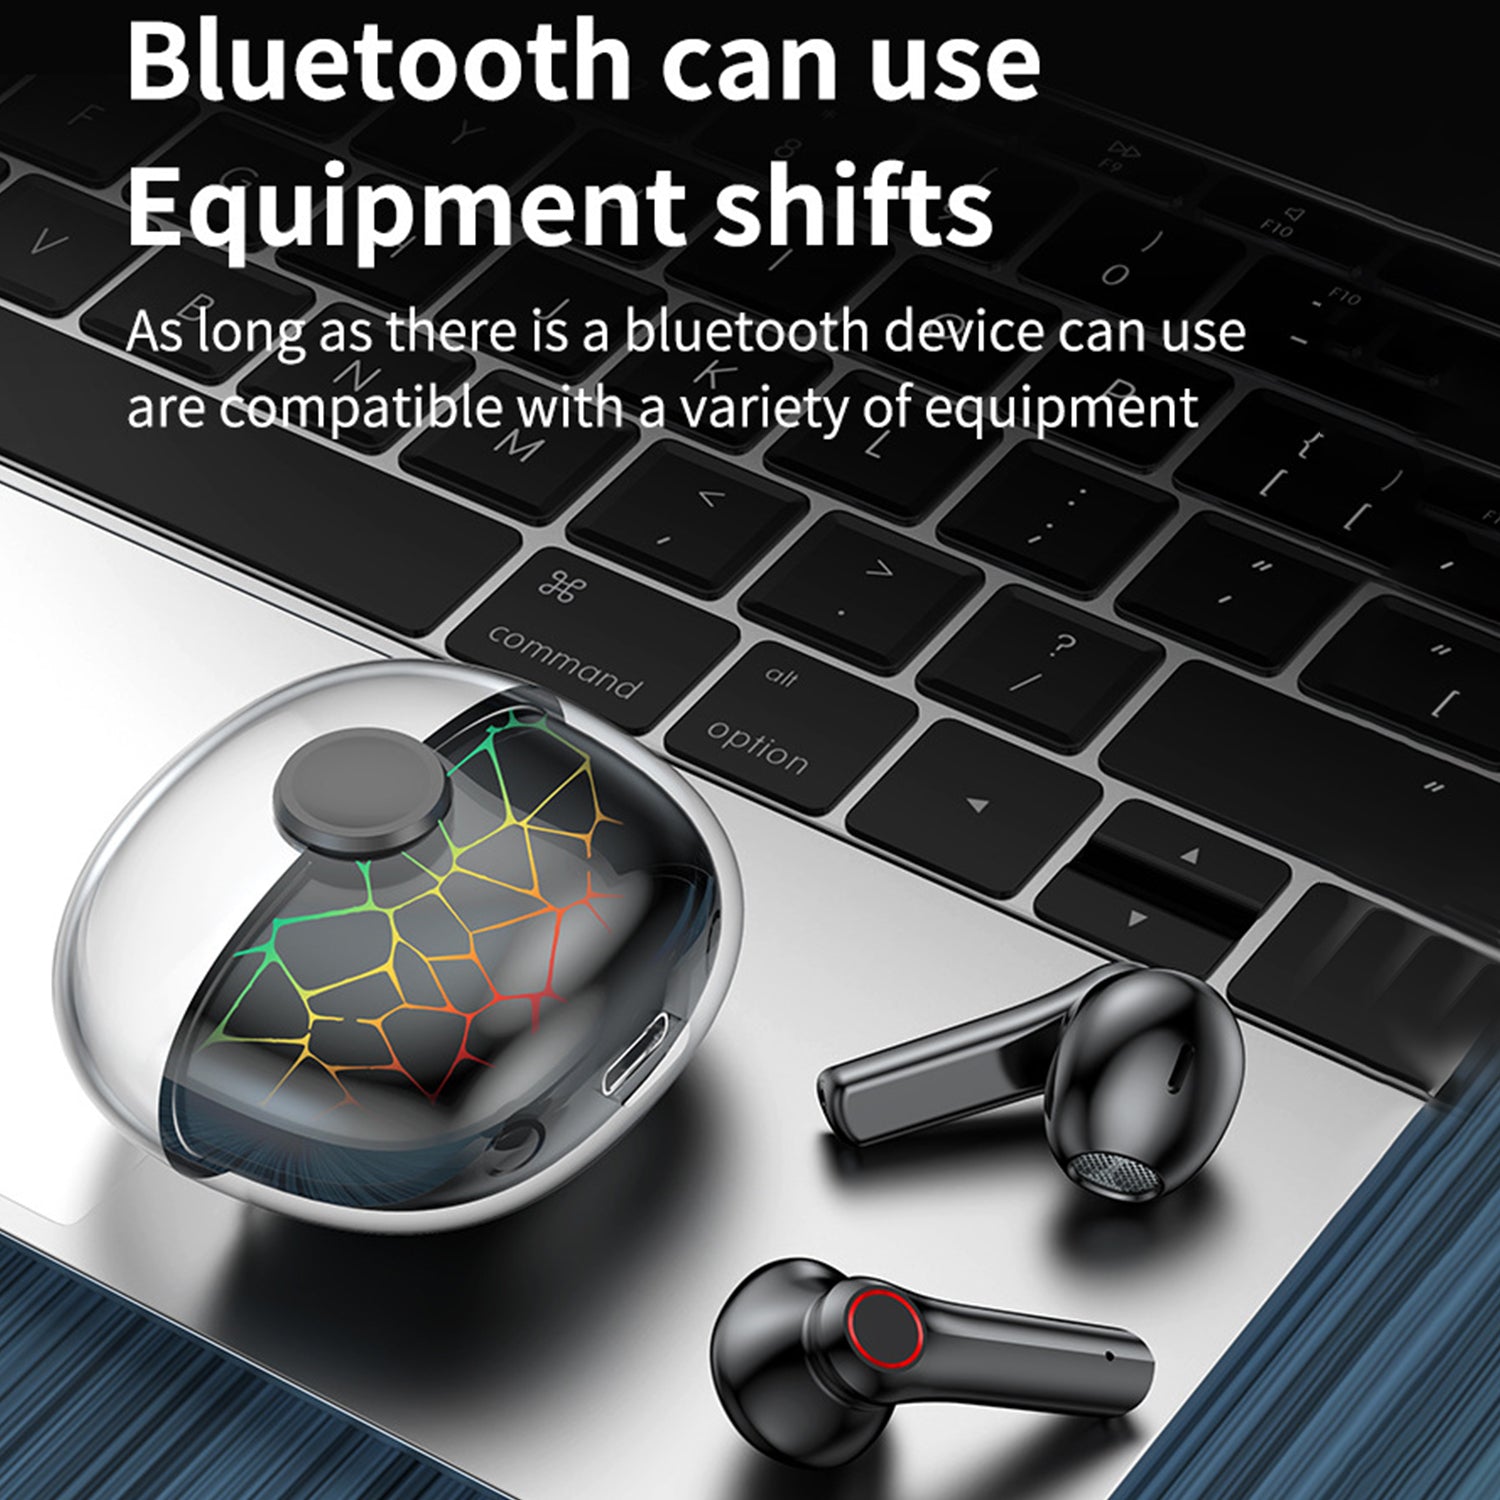 Wireless Bluetooth Transparent Crack Light Noise Reduction Earphones